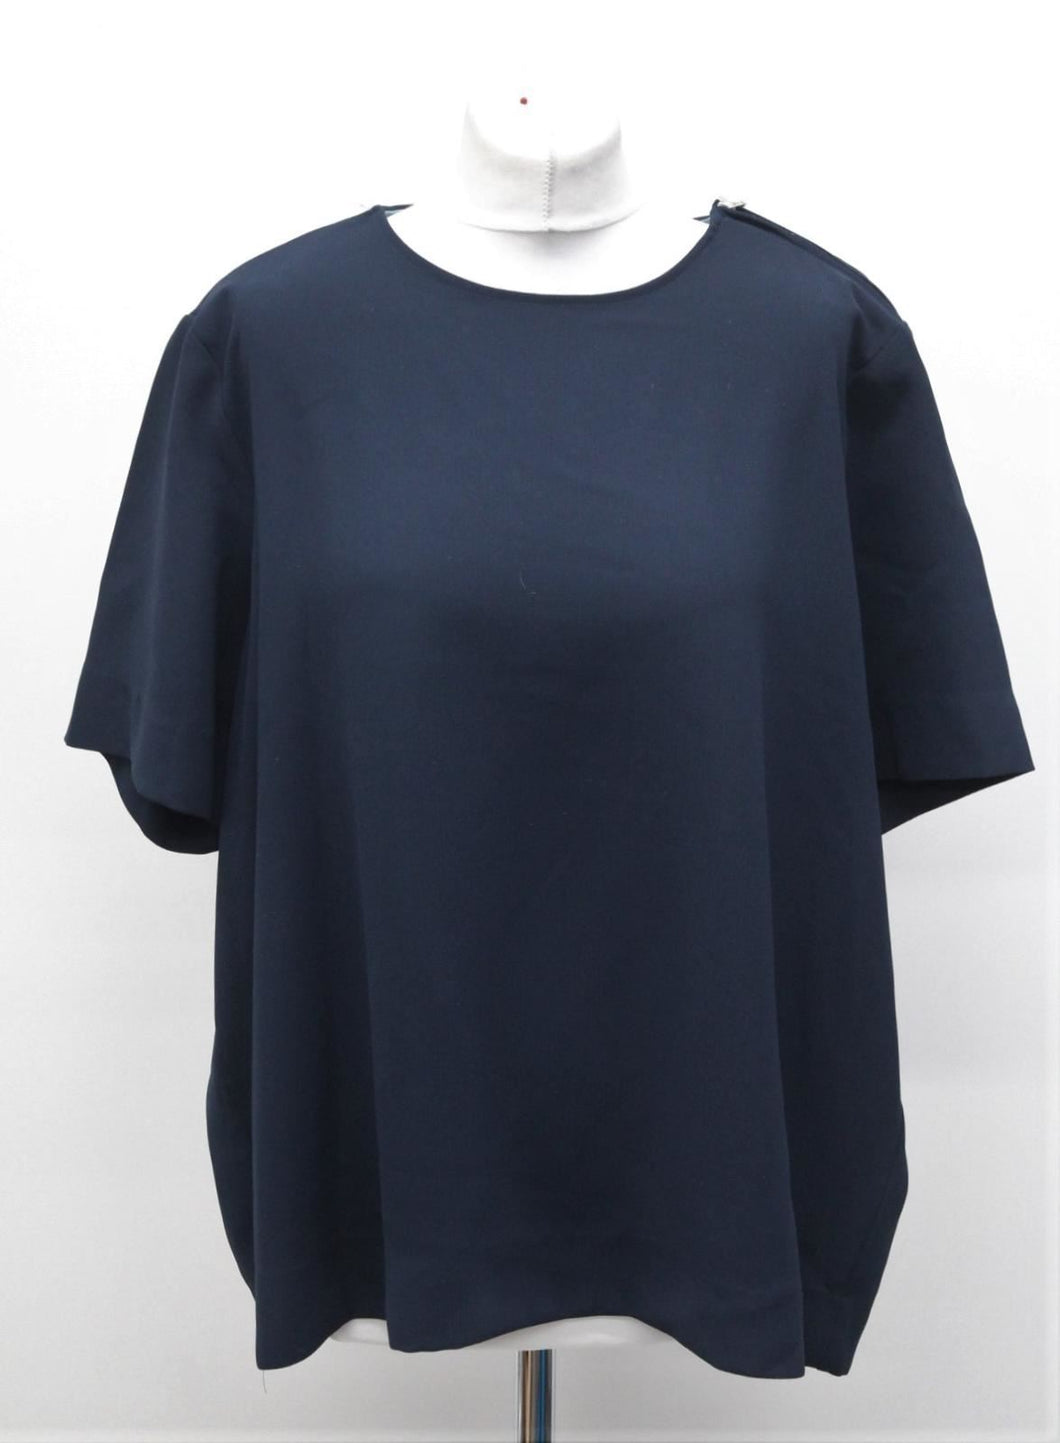 M&S Marks & Spencer Ladies Navy Blue Short Sleeve Top UK18 RRP39.5 NEW